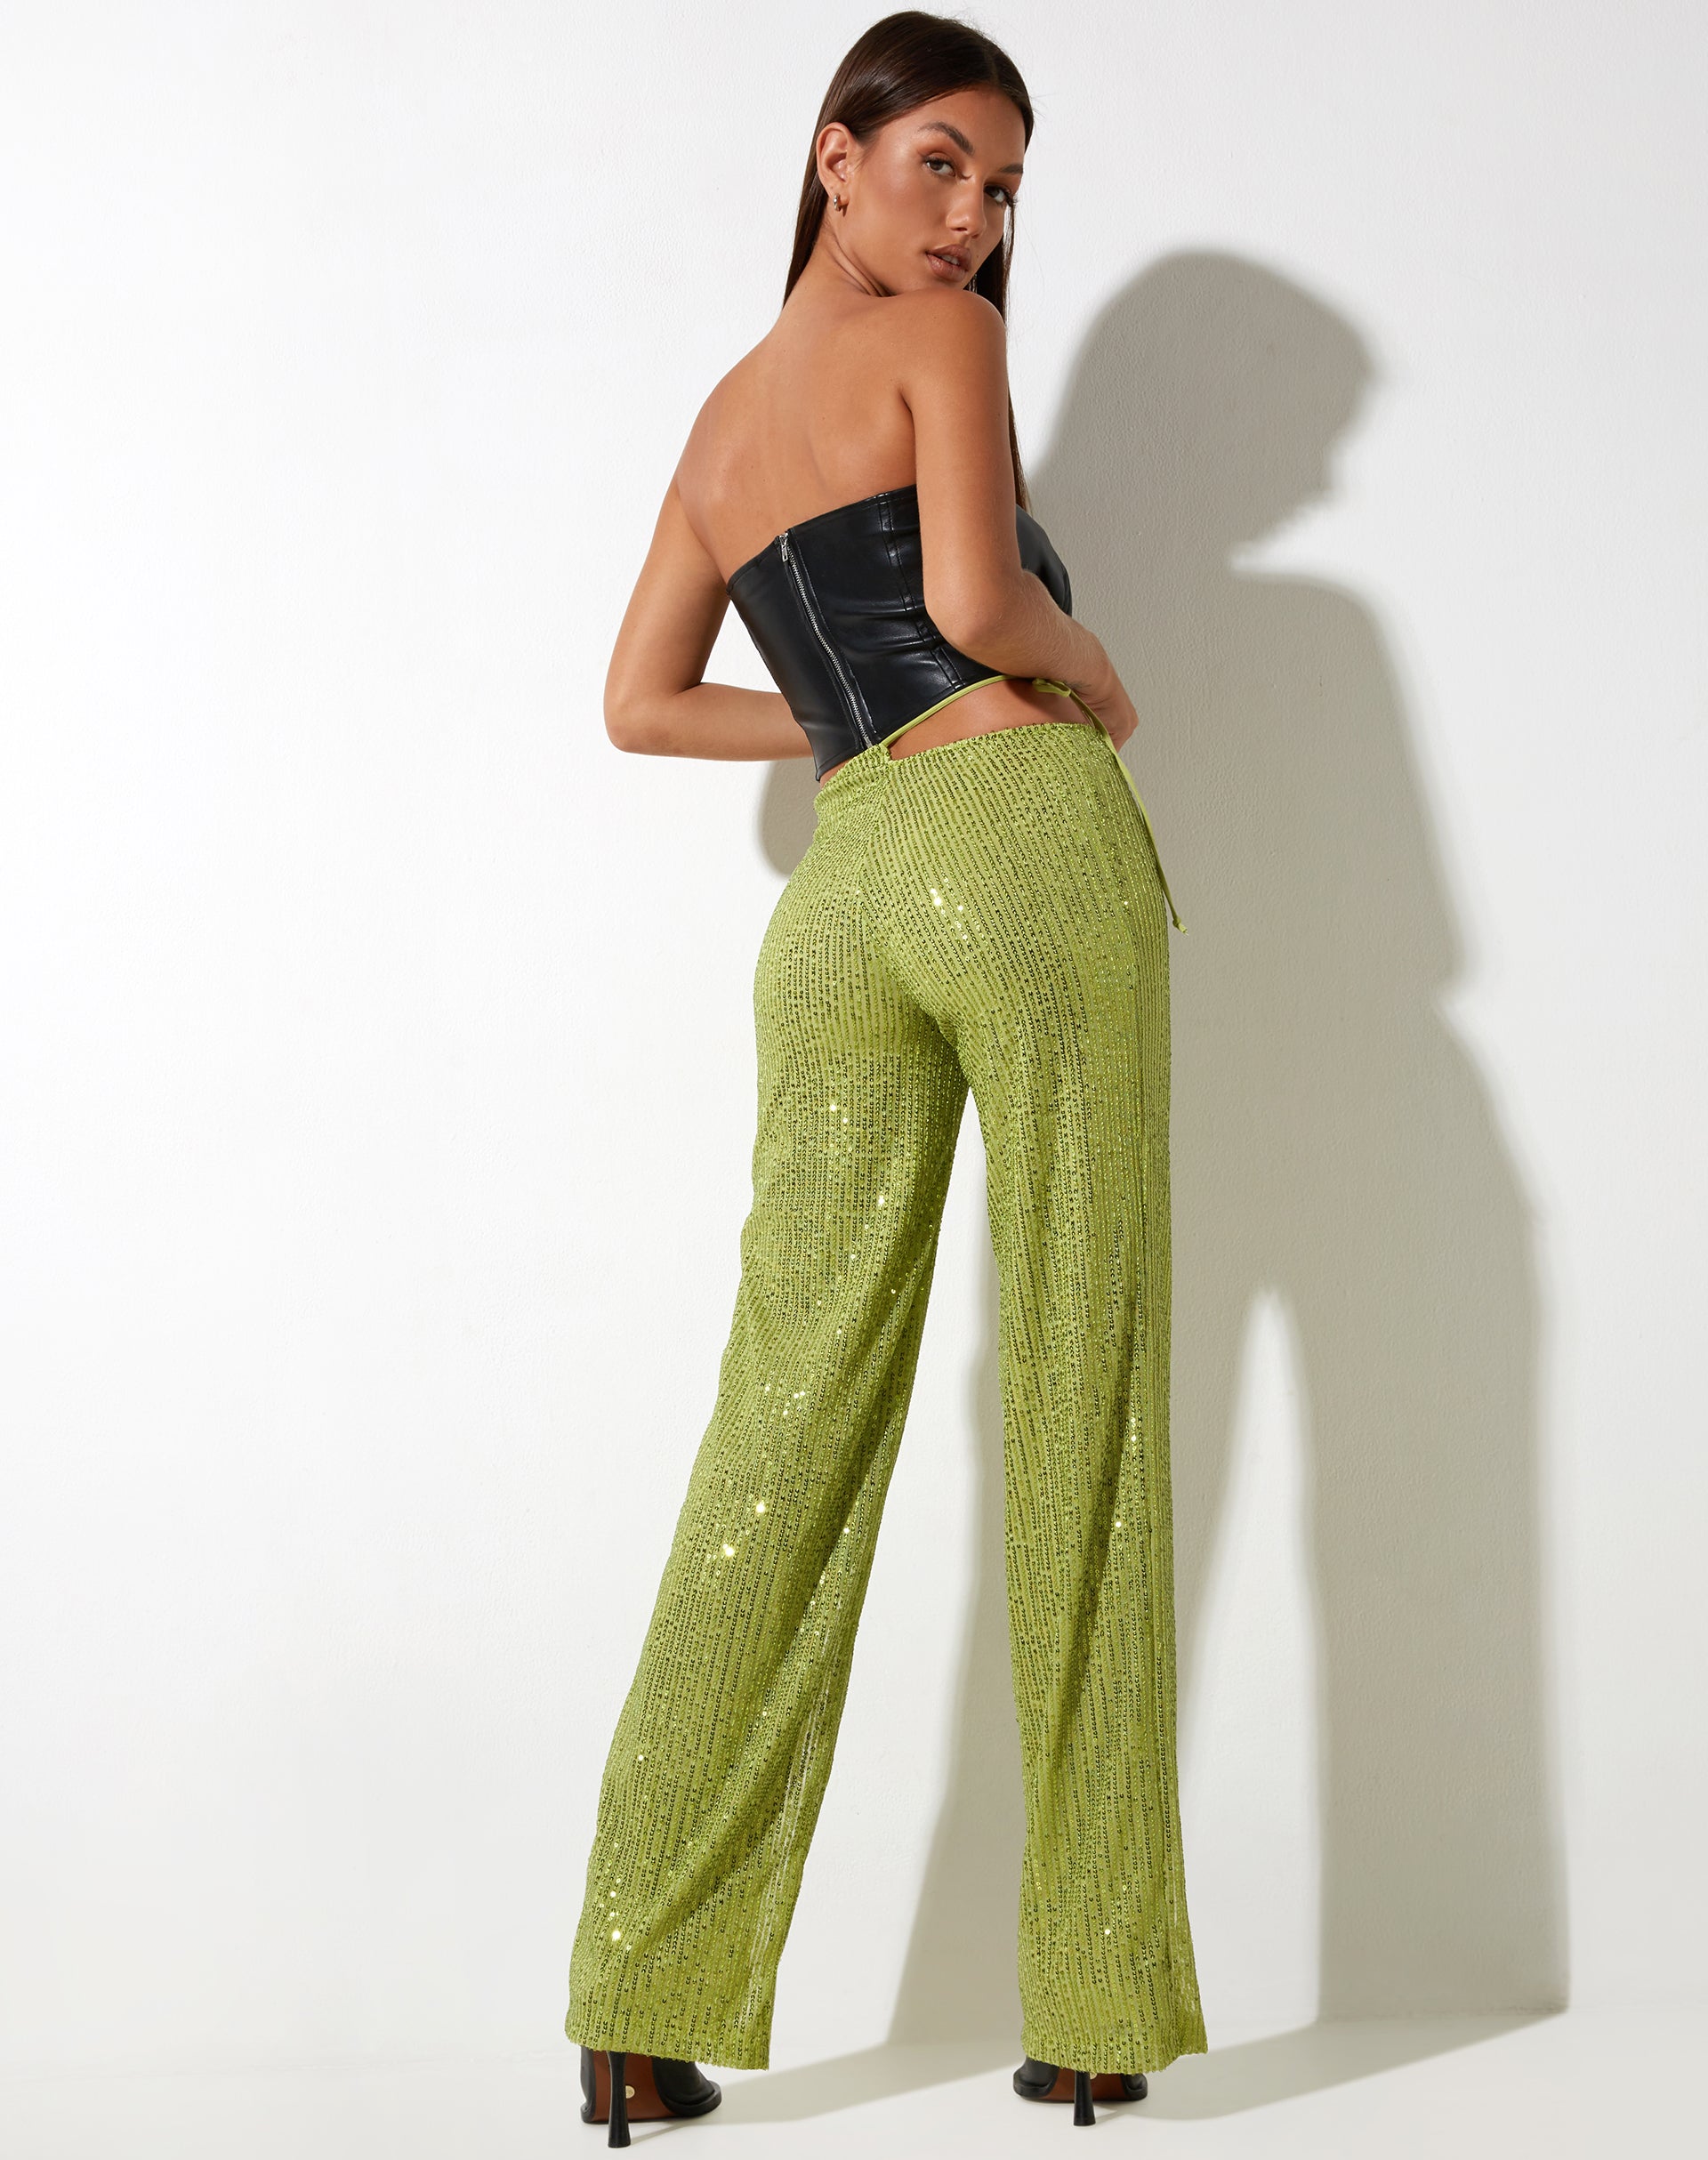 Image of Sanju Trouser in Drape Sequin Lime Green